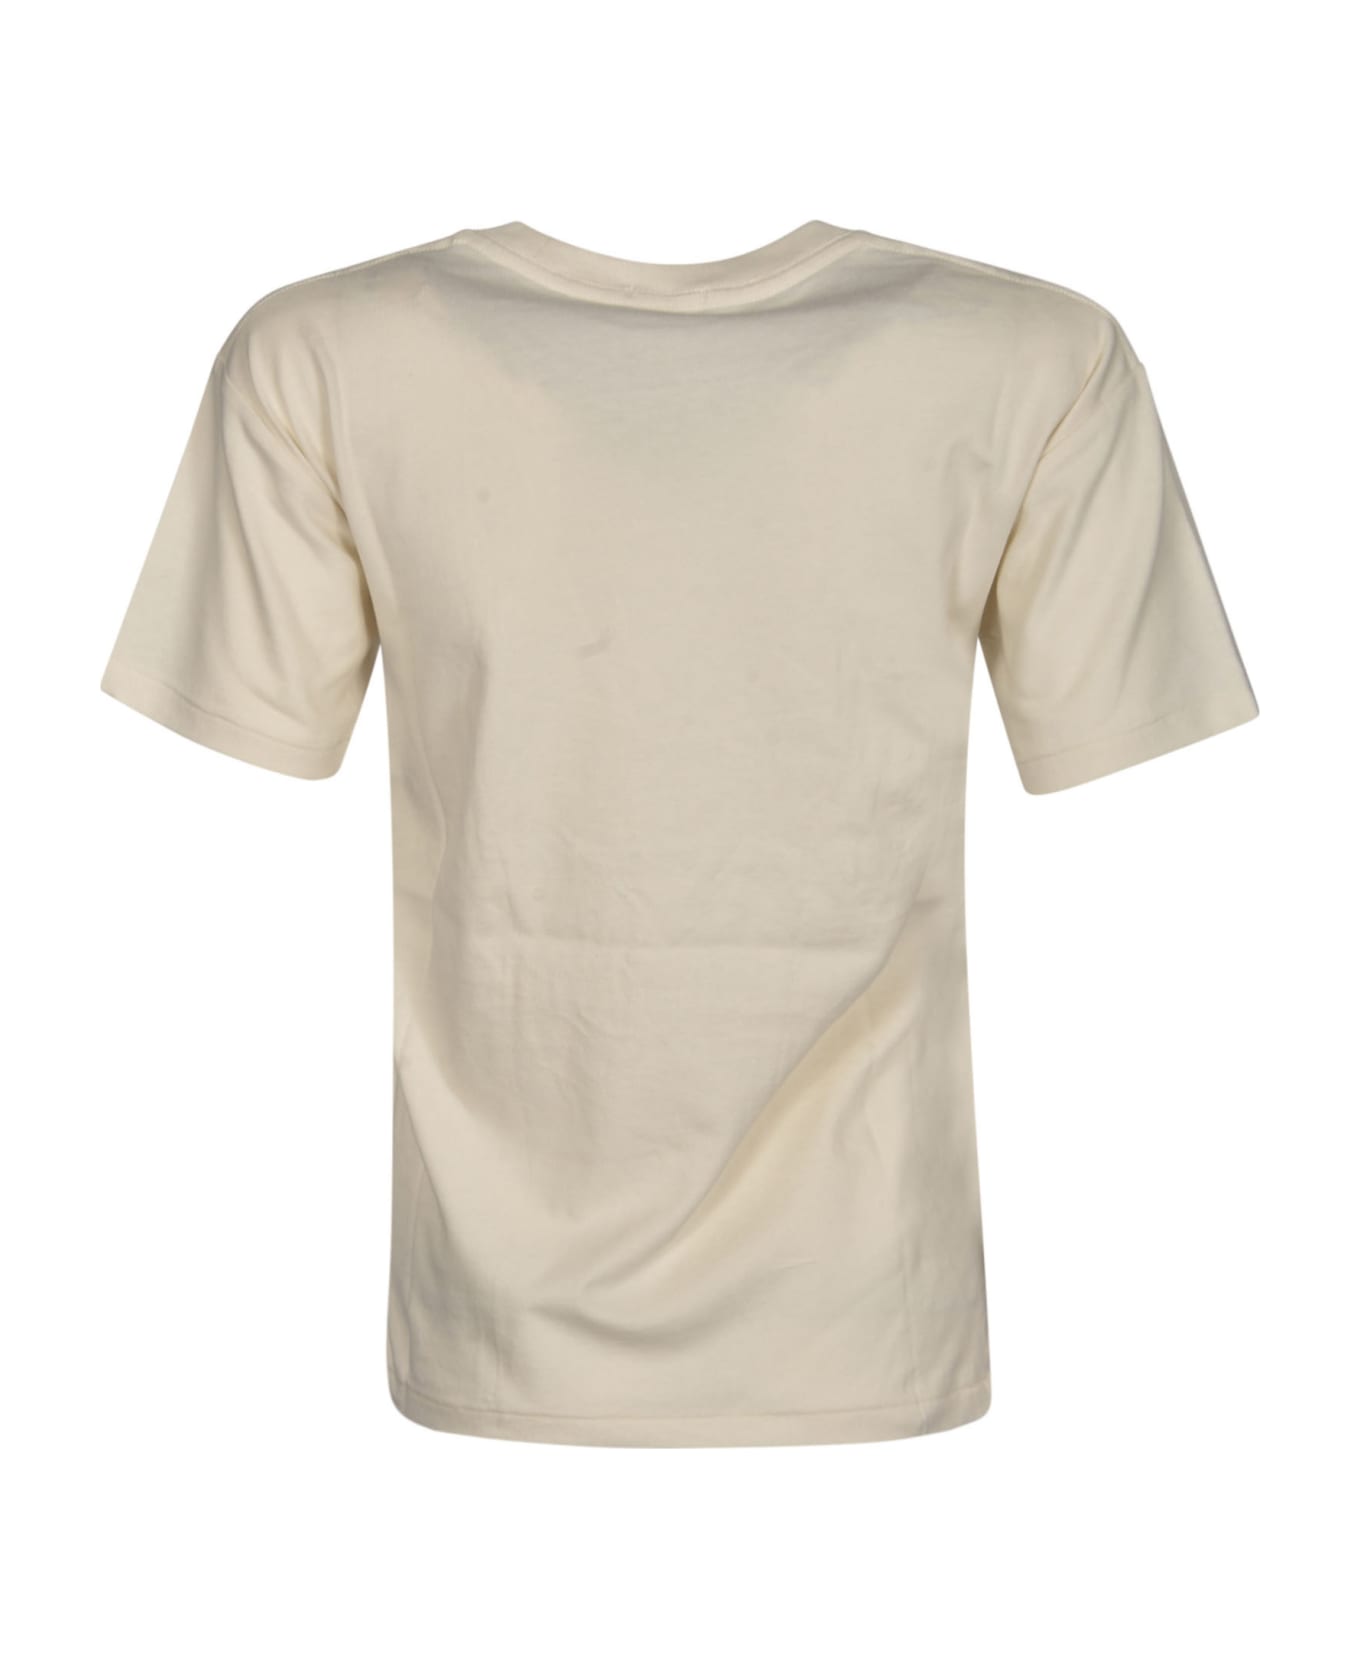 Polo Ralph Lauren Quality Goods T-shirt - Antique cream